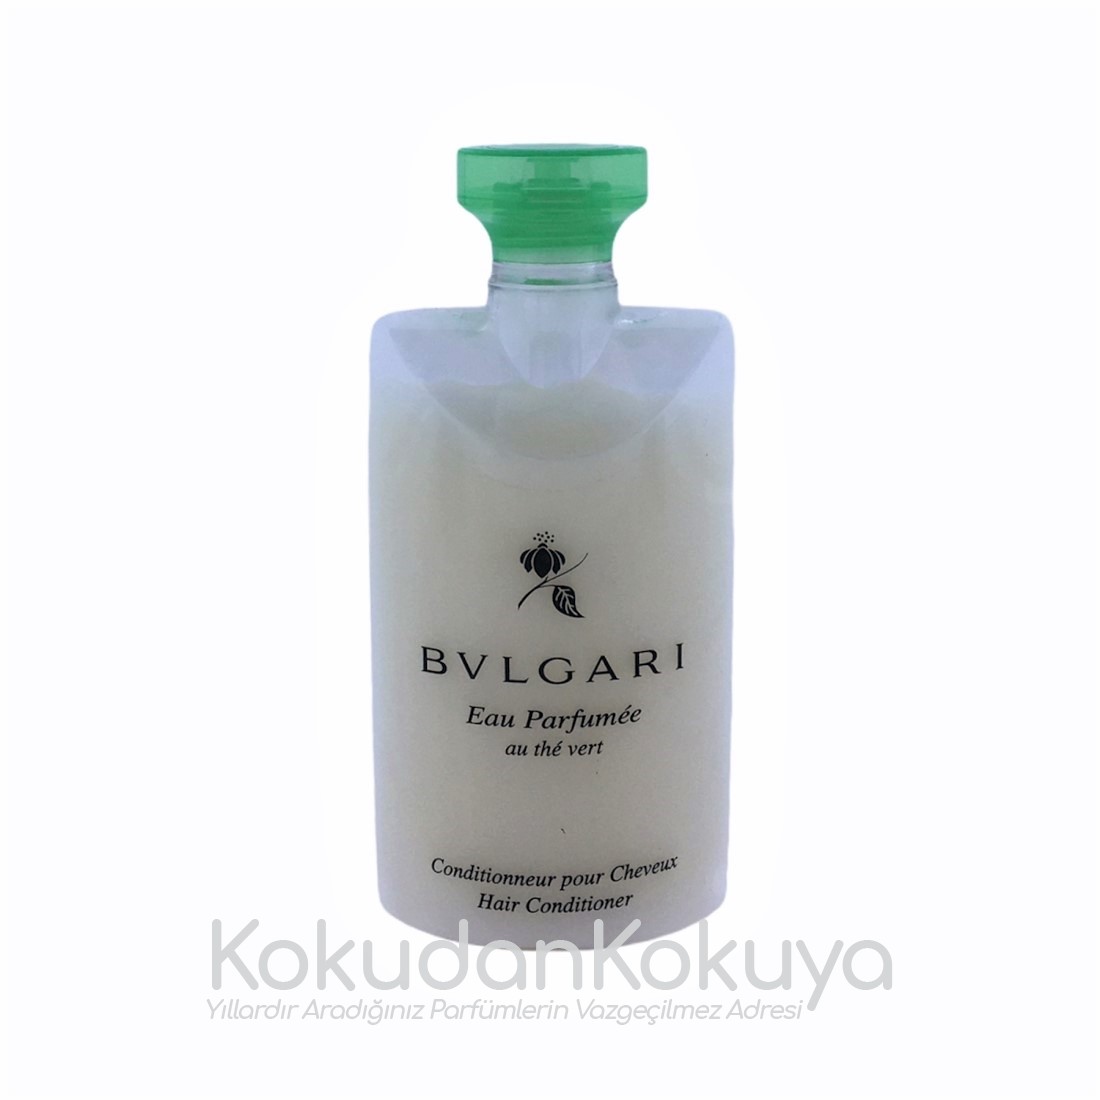 BVLGARI Eau Parfumee Au The Vert (Vintage) Saç Bakım Ürünleri Unisex 75ml Saç Bakım Kremi / Conditioner (Normal) 